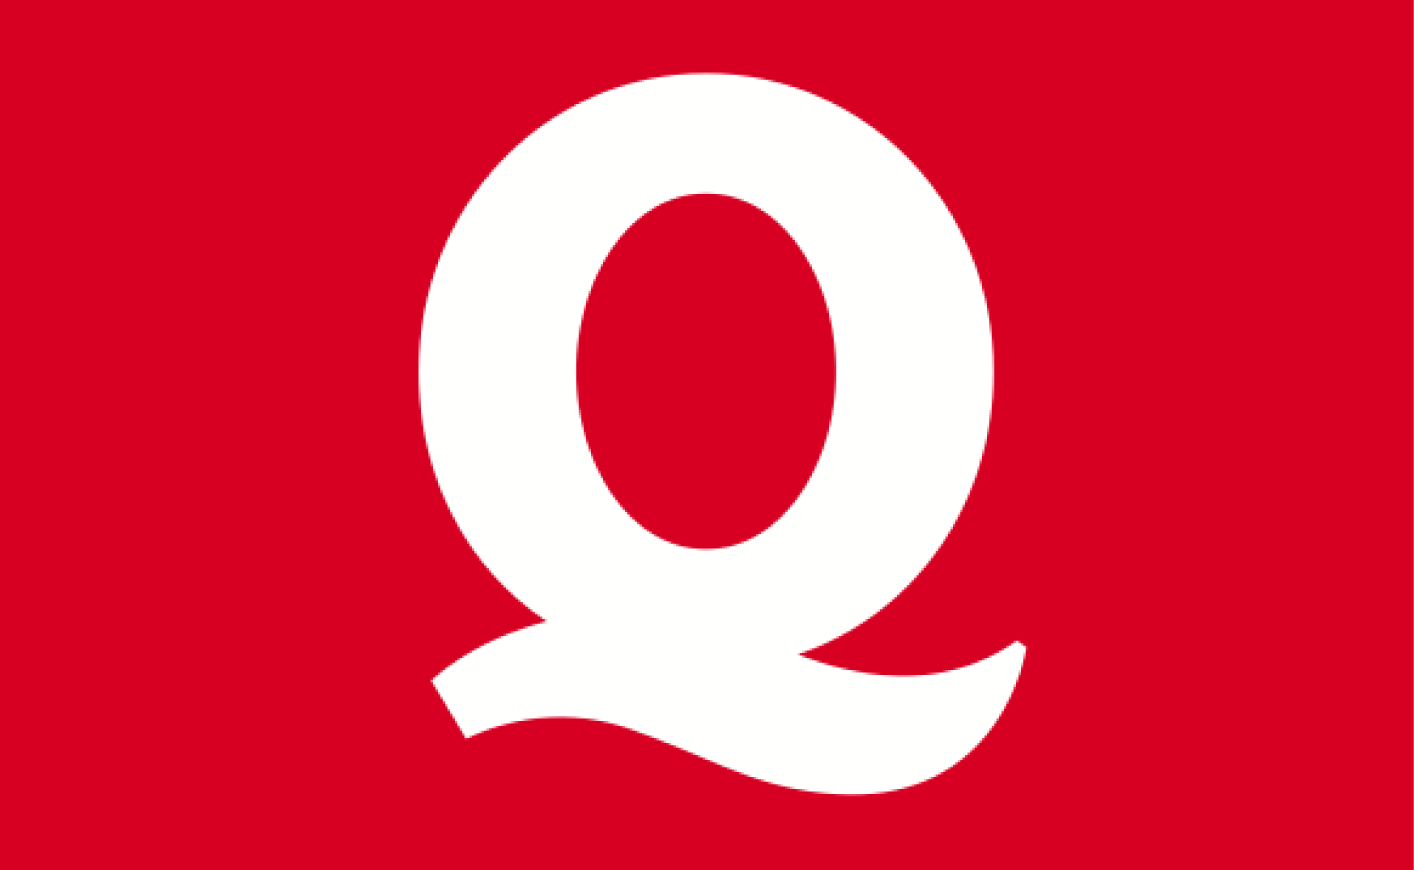 Big Red Q Logo - Red Q Logo.store